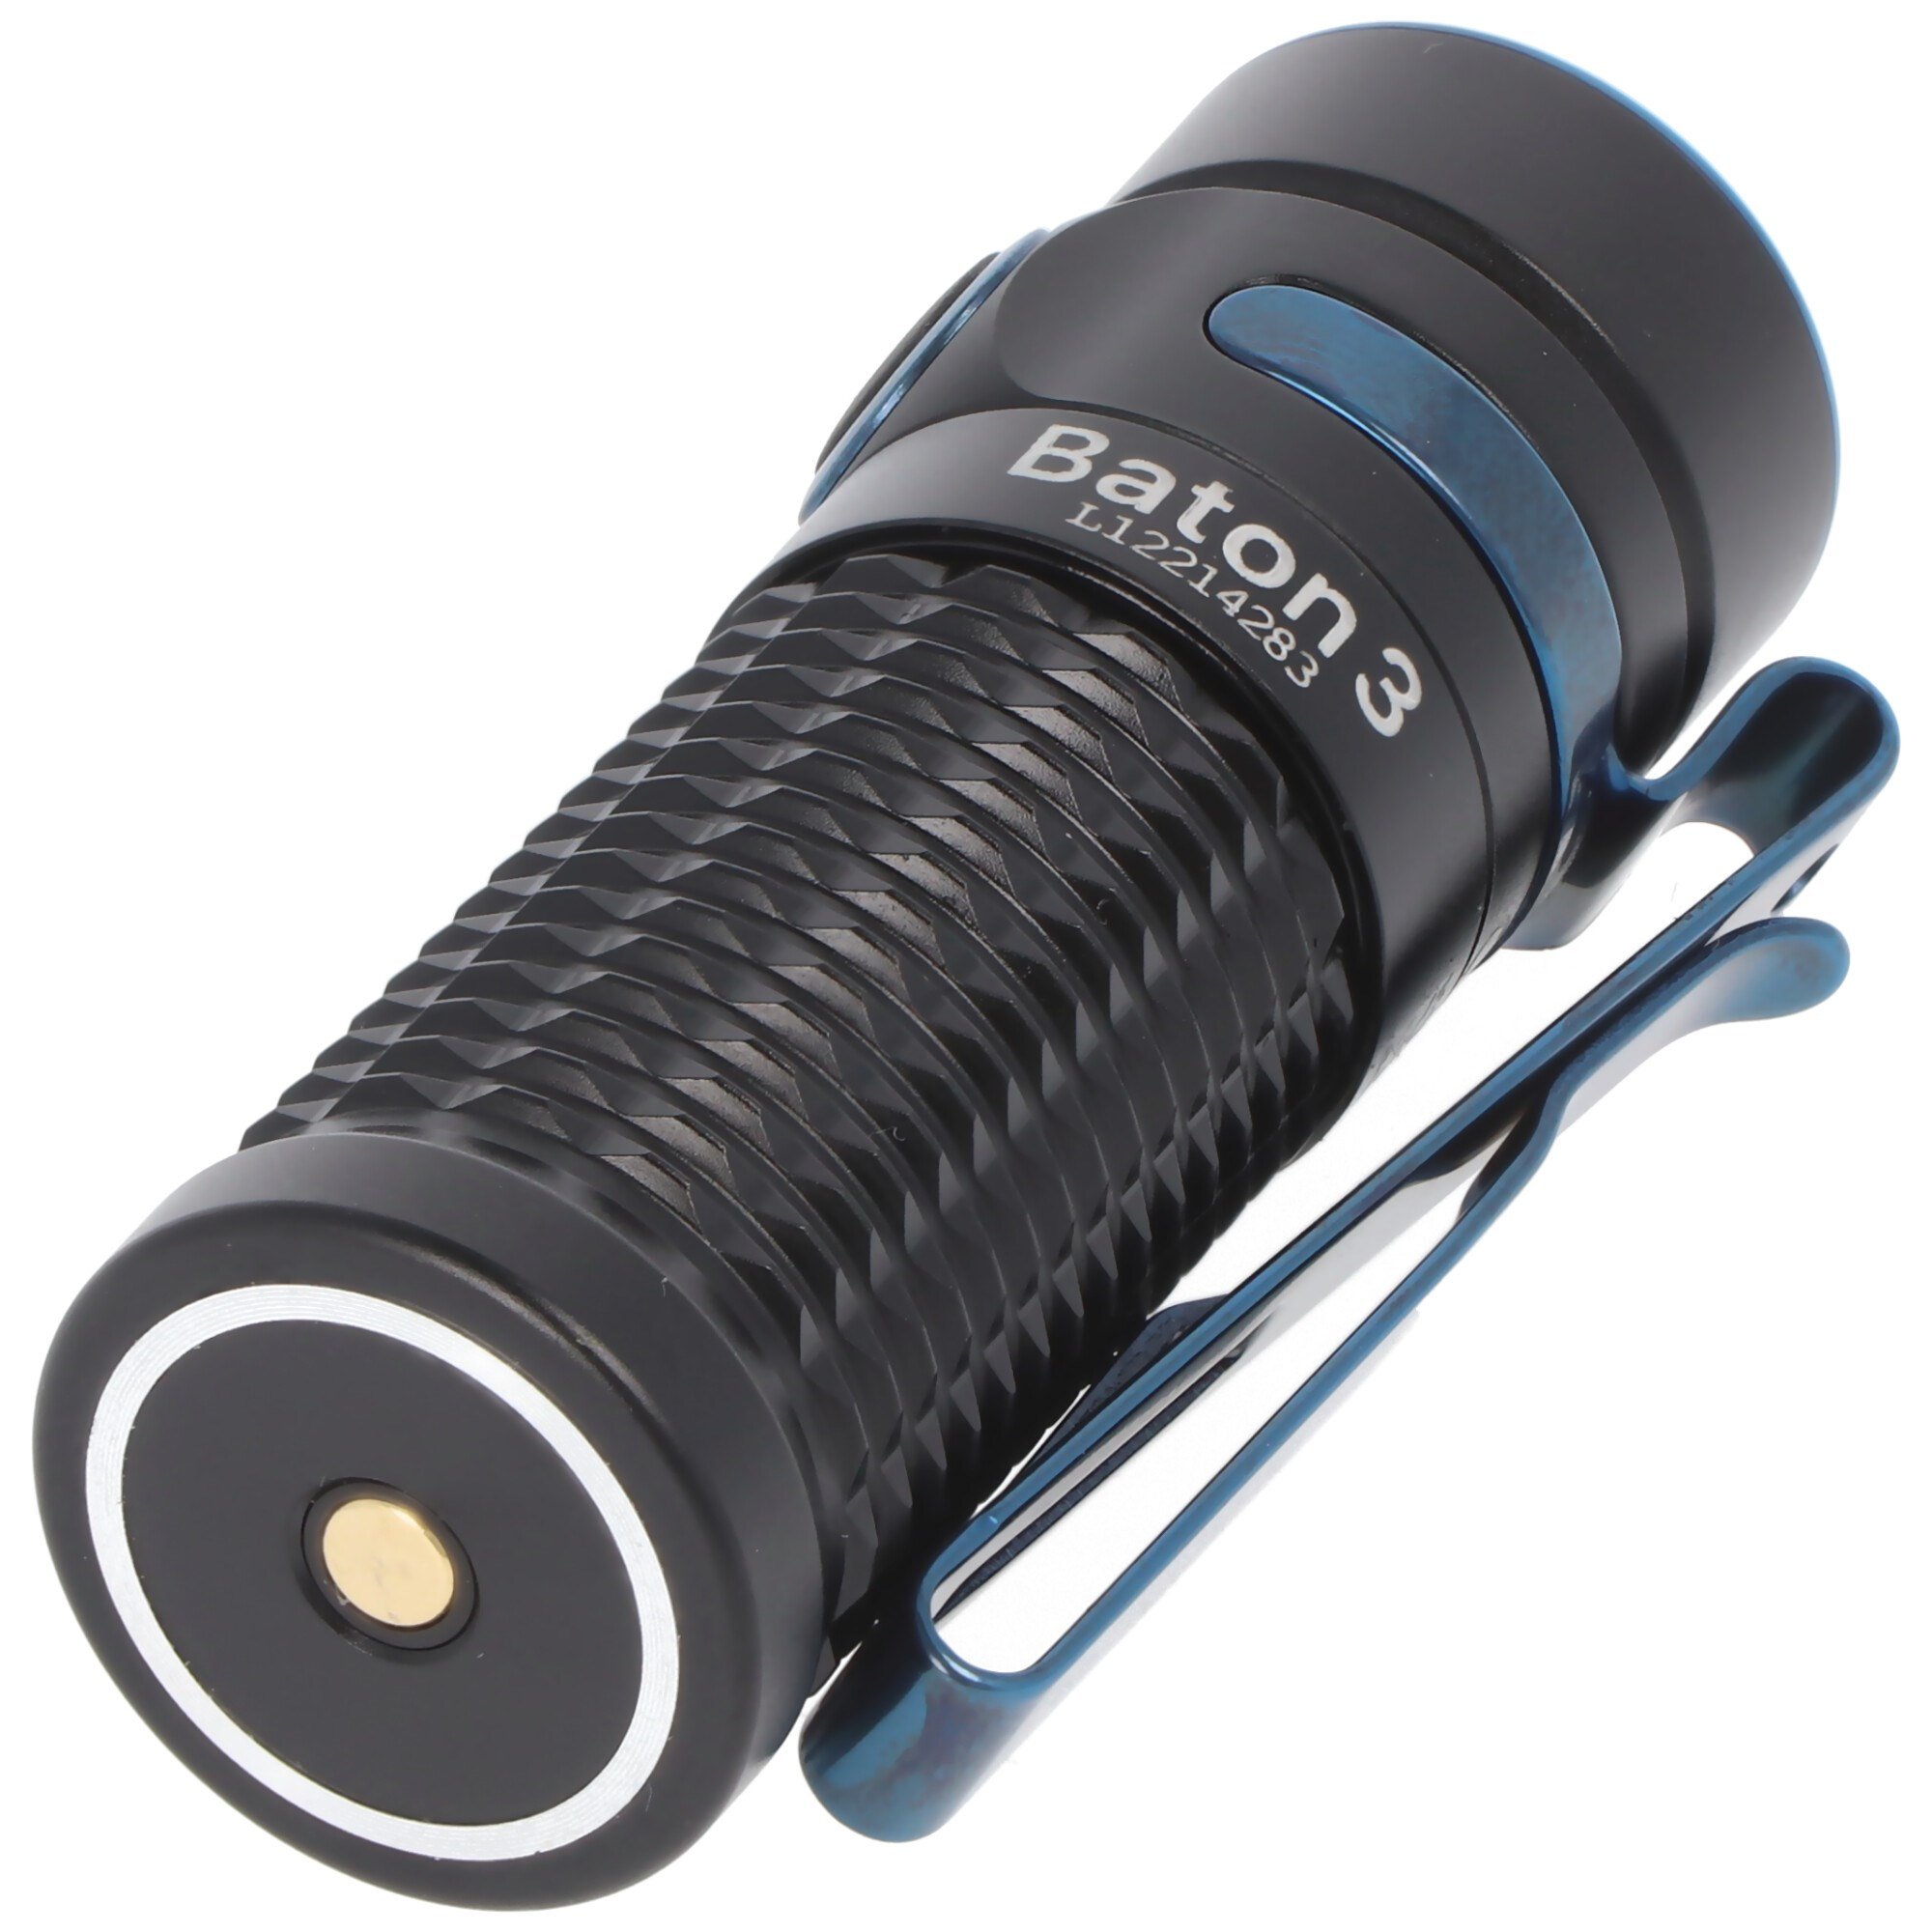 Olight Baton 3 Premium Edition, siyah şarj kılıflı Baton 3 LED el feneri,  pil dahil kablosuz